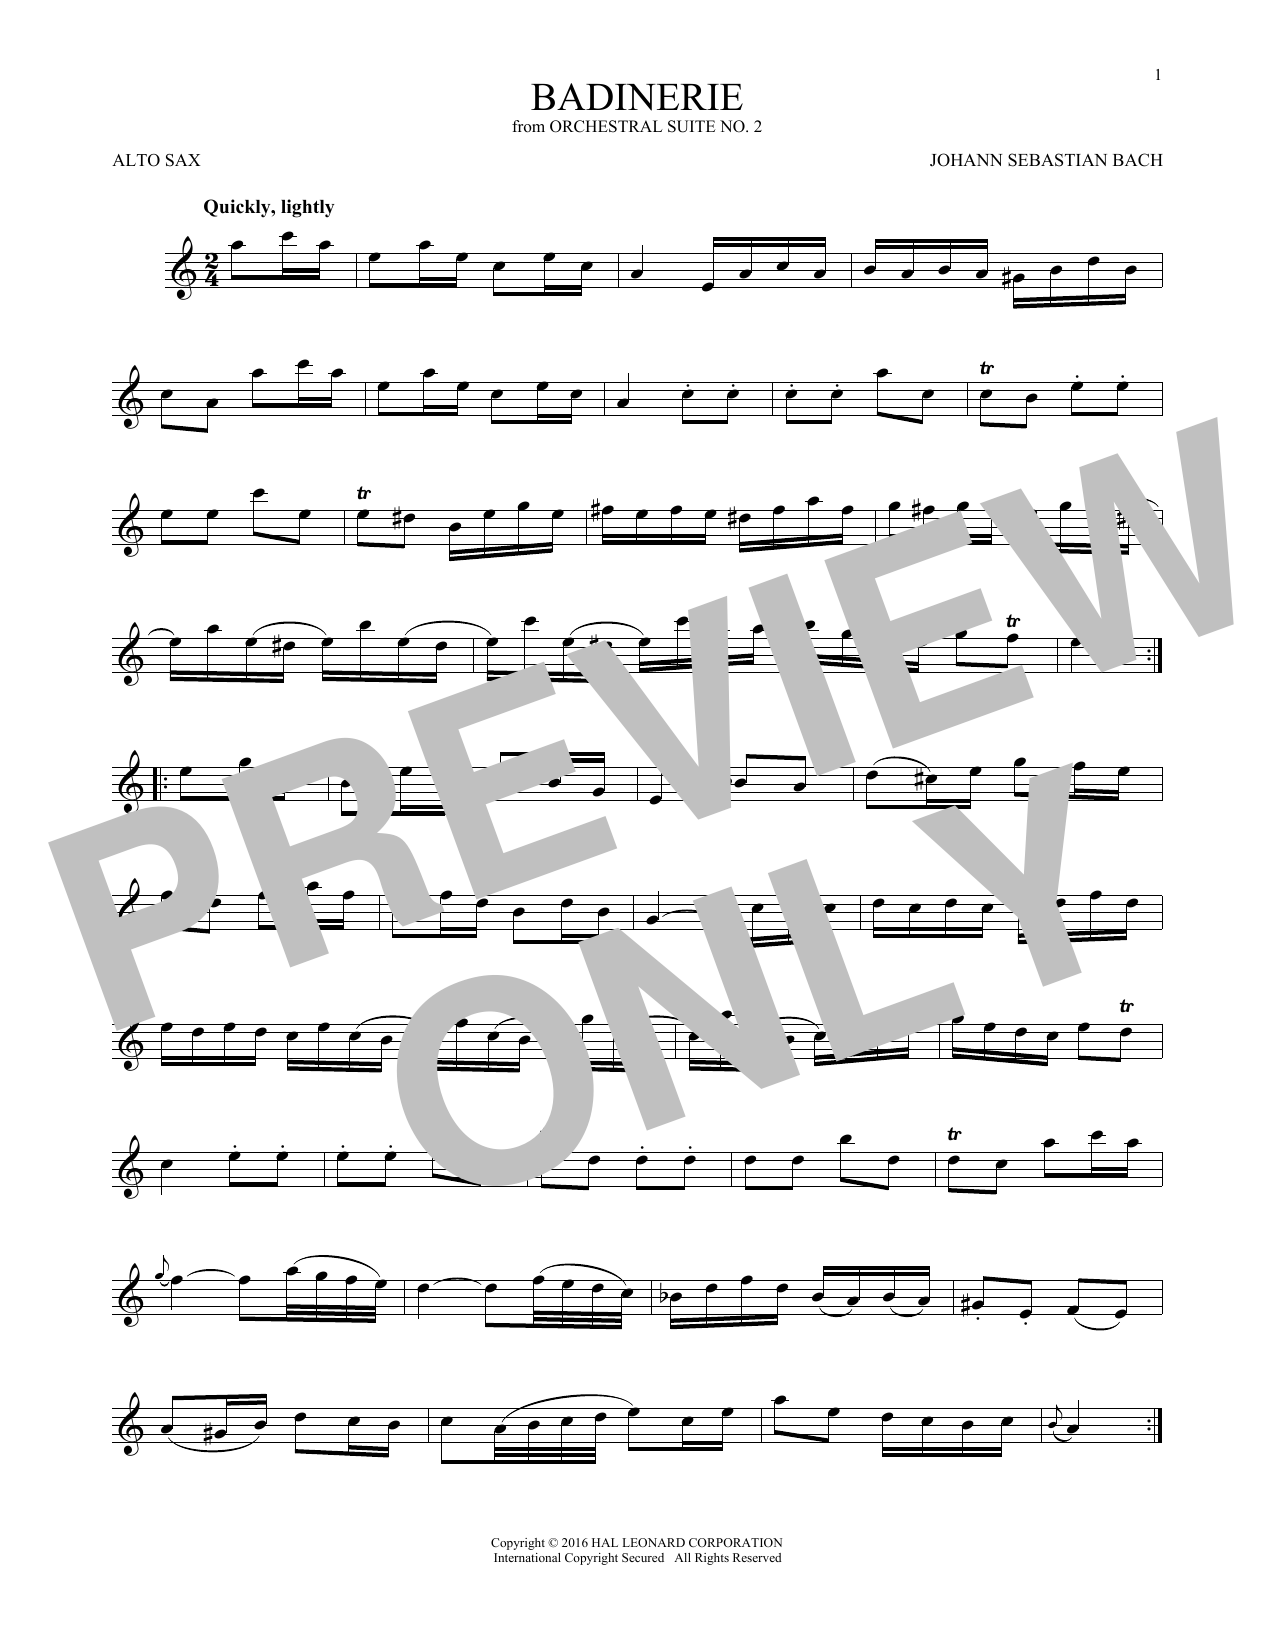 Johann Sebastian Bach Badinerie (Suite No. 2) Sheet Music Notes & Chords for Violin - Download or Print PDF